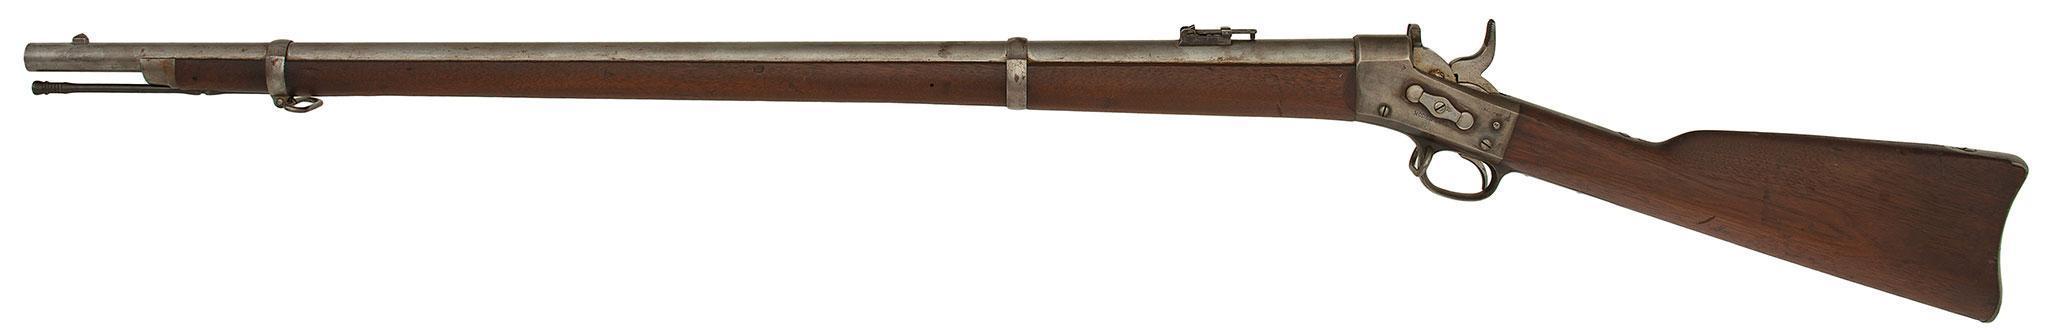 Model 1872 Springfield Rolling Block Rifle